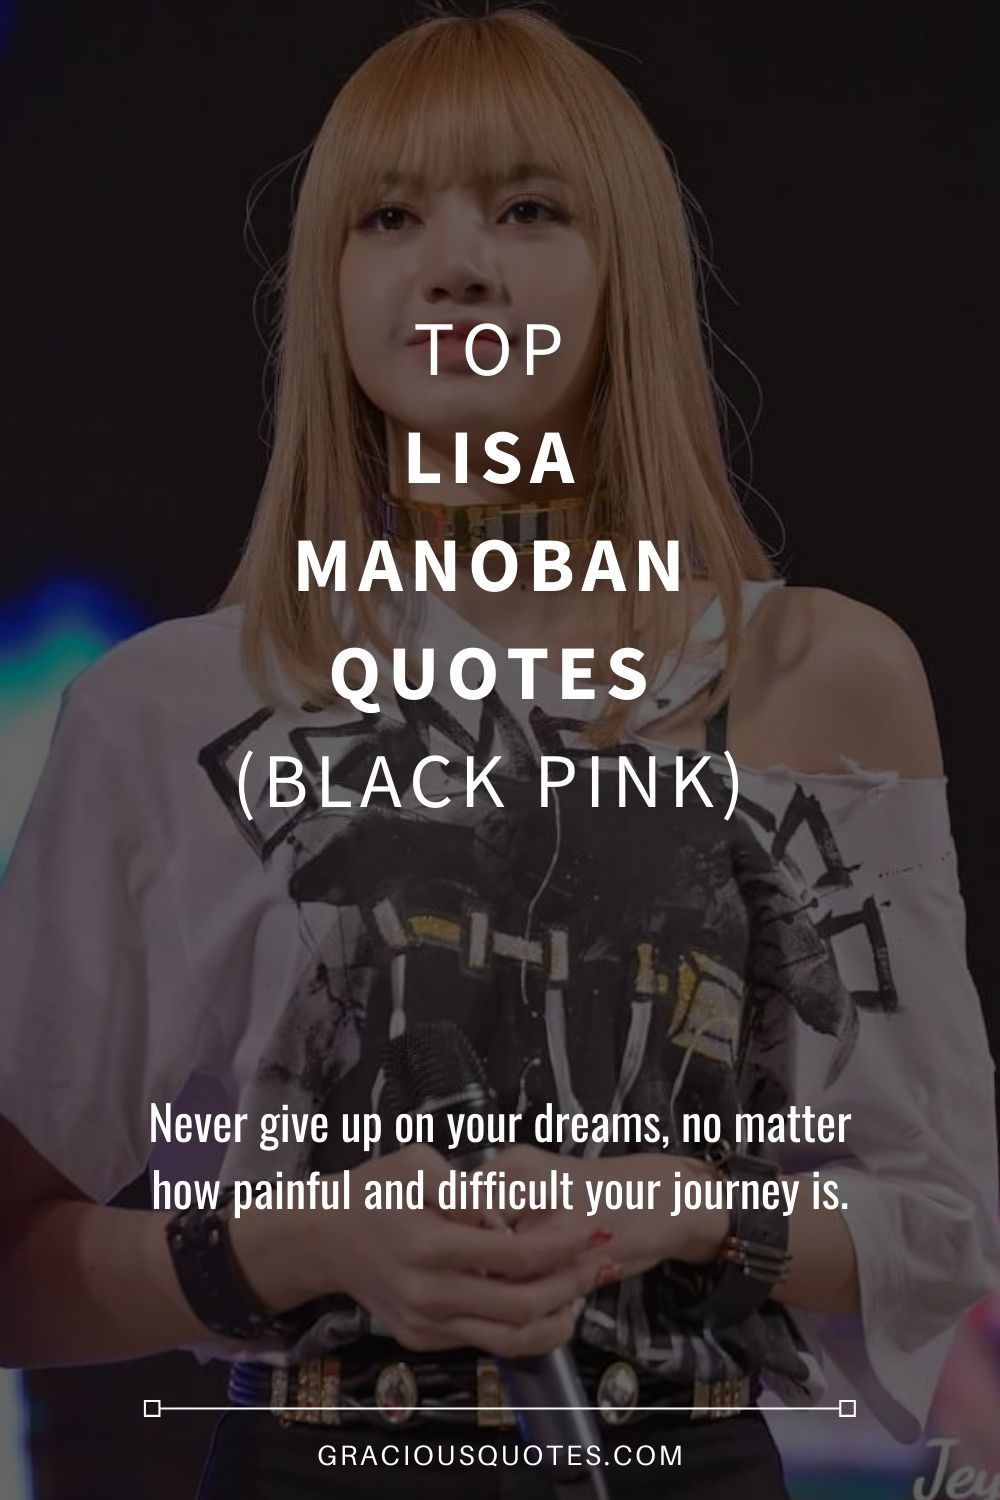 Top Lisa Manoban Quotes (BLACK PINK) - Gracious Quotes